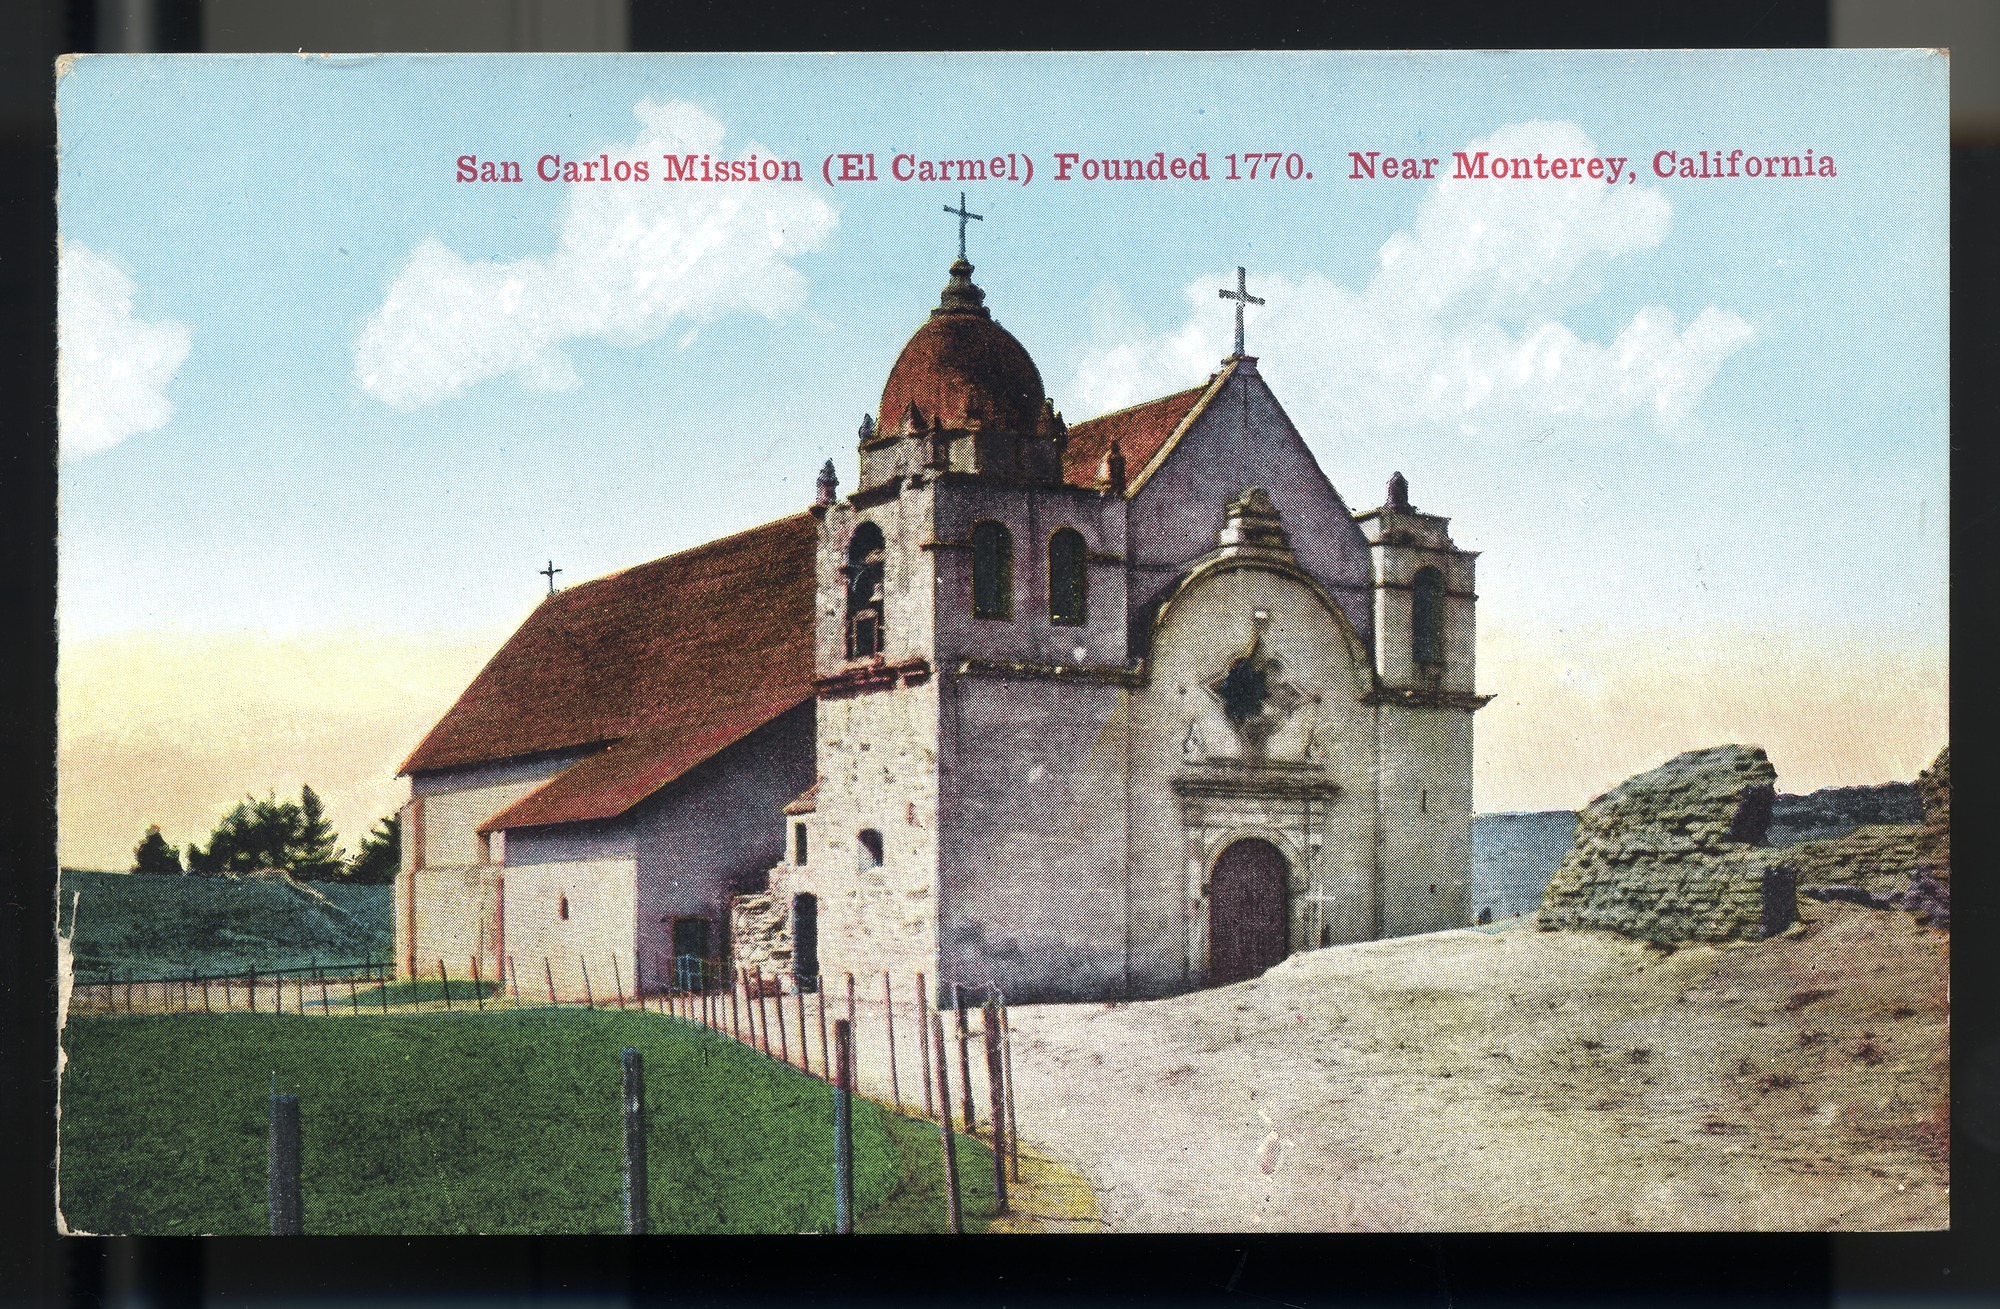 Postcard 08 – San Carlos Mission (El Carmel), Founded 1770. Near Monterey, California. Van Ornum Colorprint Company. 1908-1921. NMAH 1986.0639.0477.